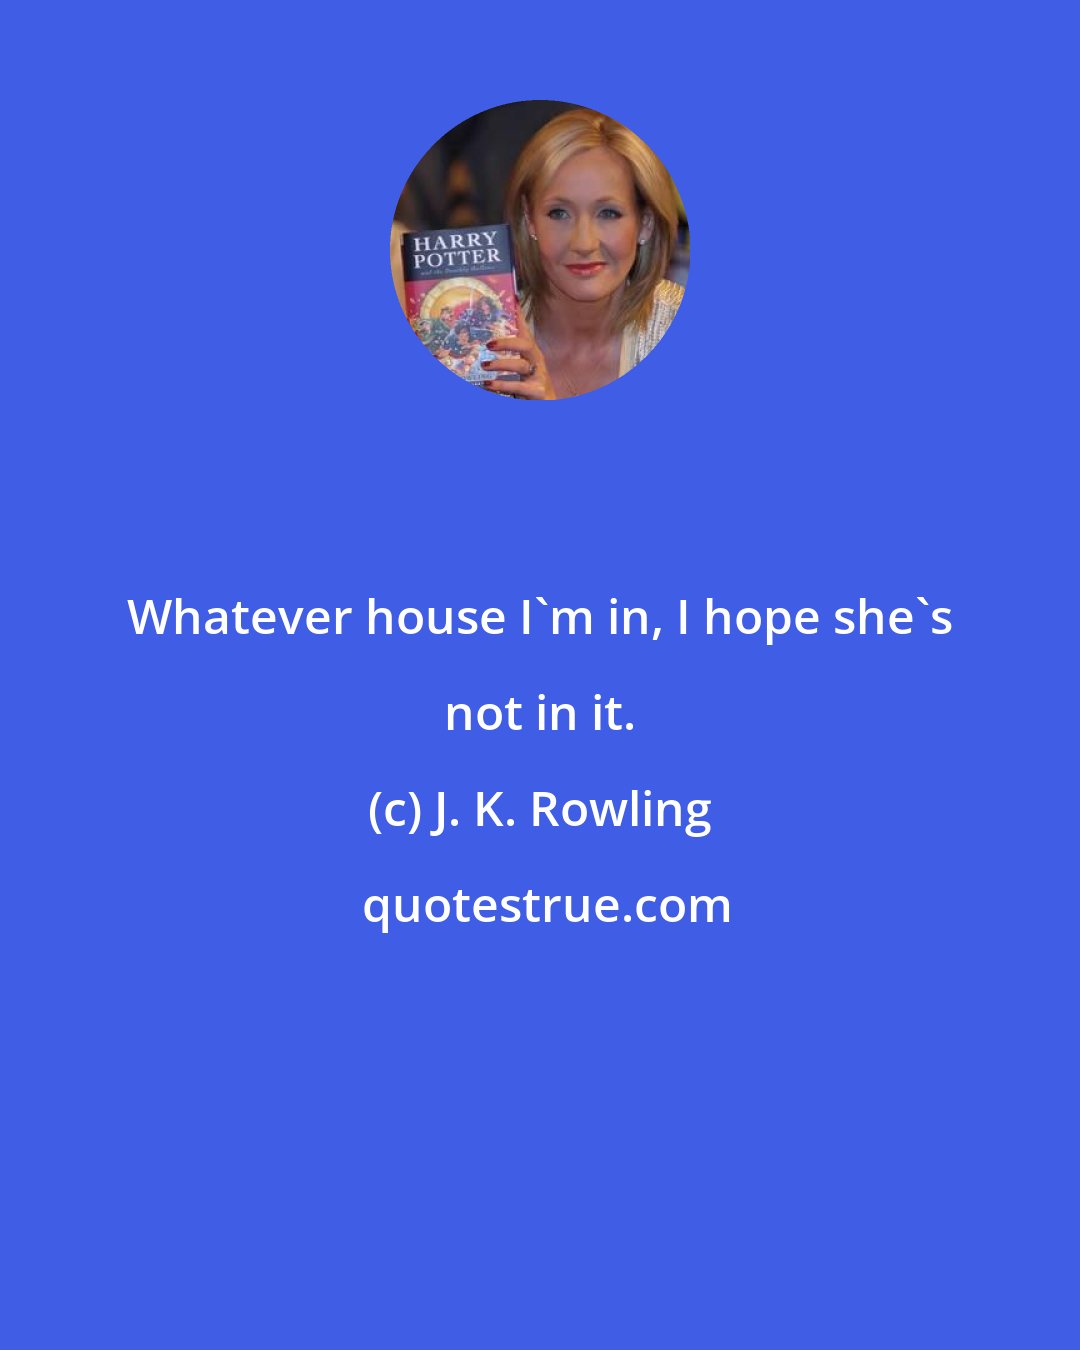 J. K. Rowling: Whatever house I'm in, I hope she's not in it.